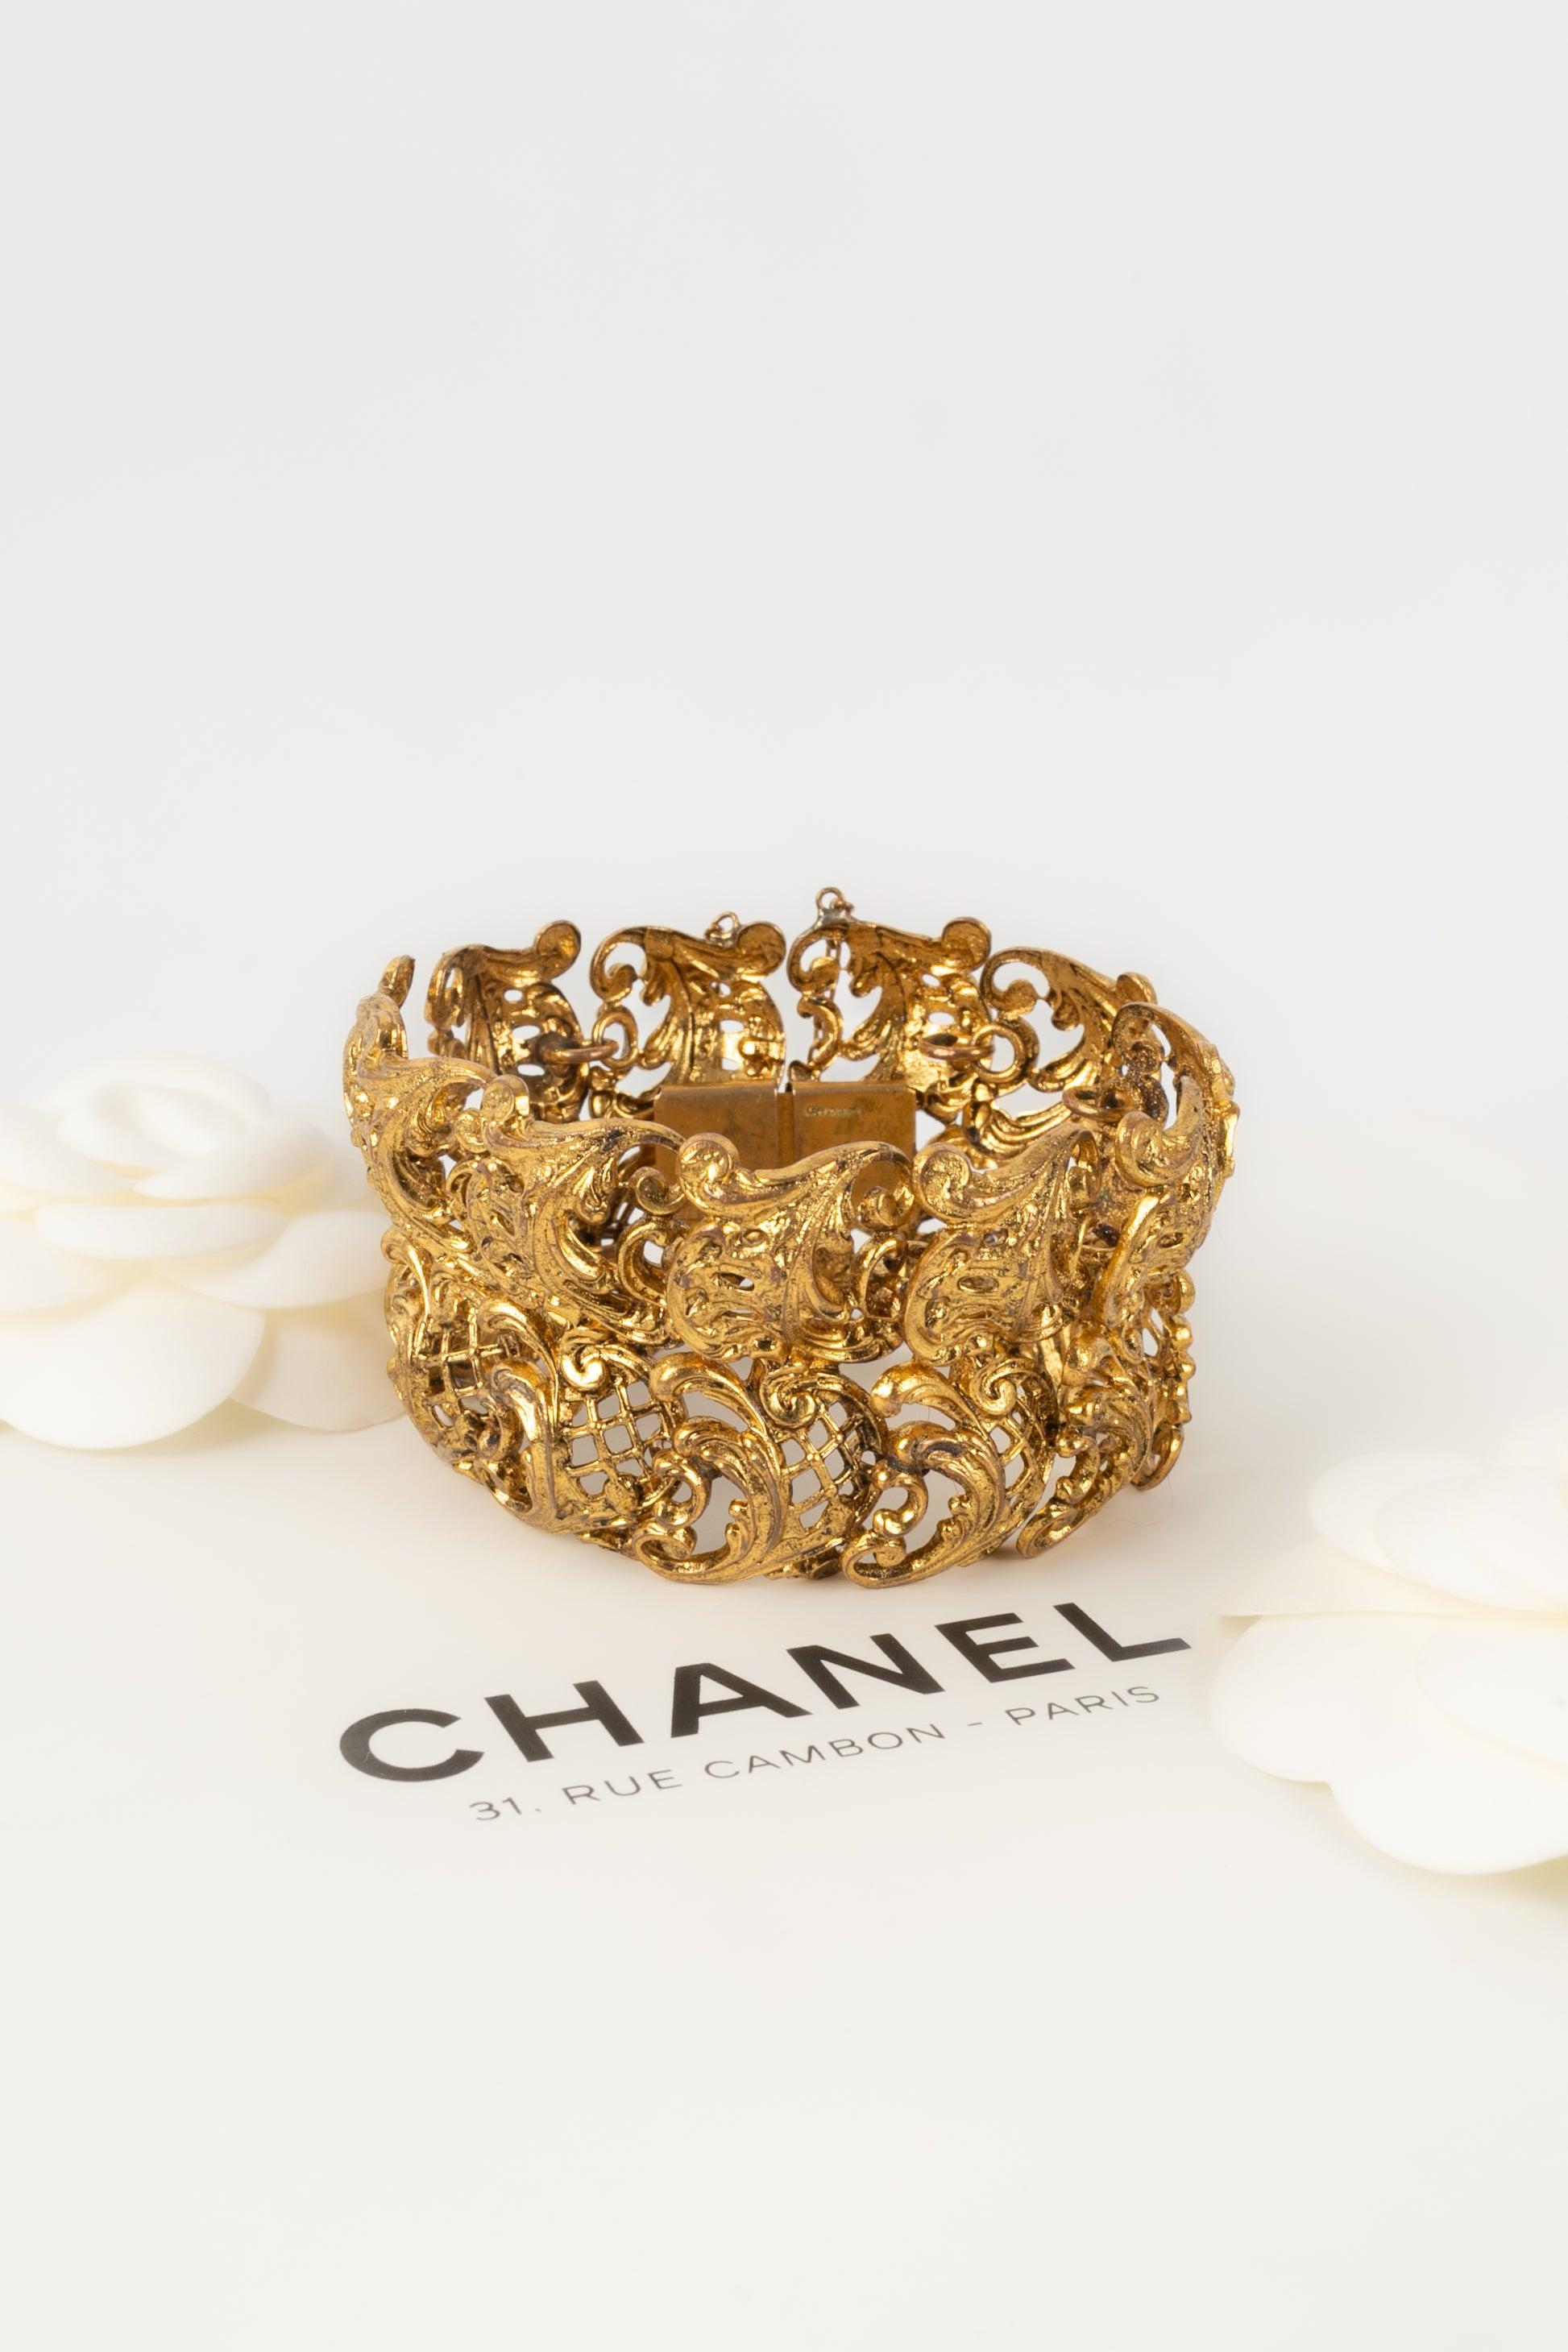 Chanel Armband Haute Couture aus goldenem Metall, durchbrochen im Angebot 3